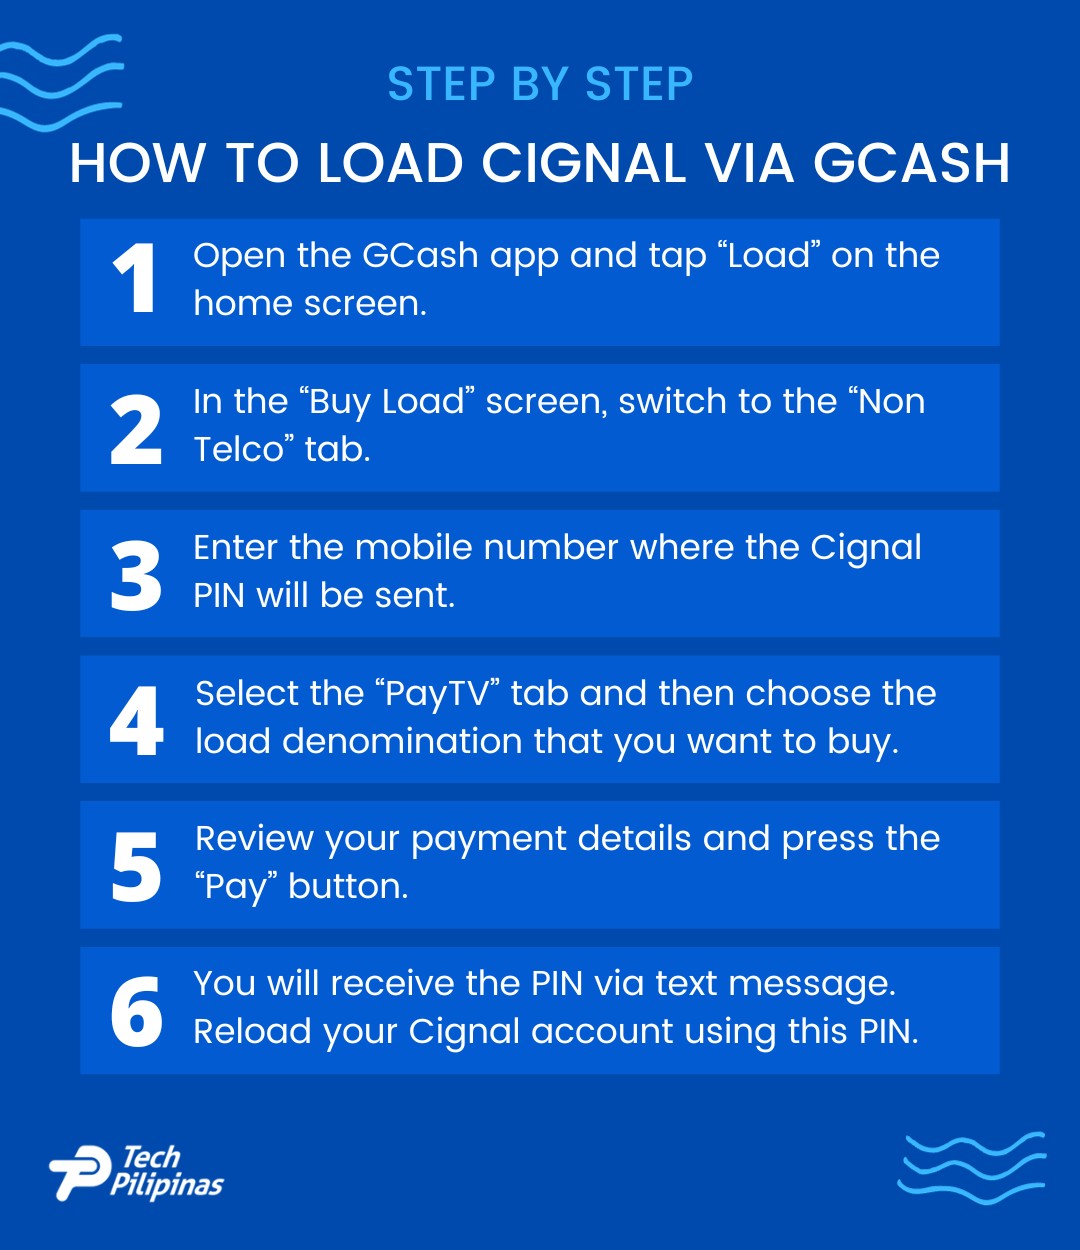 How to load Cignal using GCash